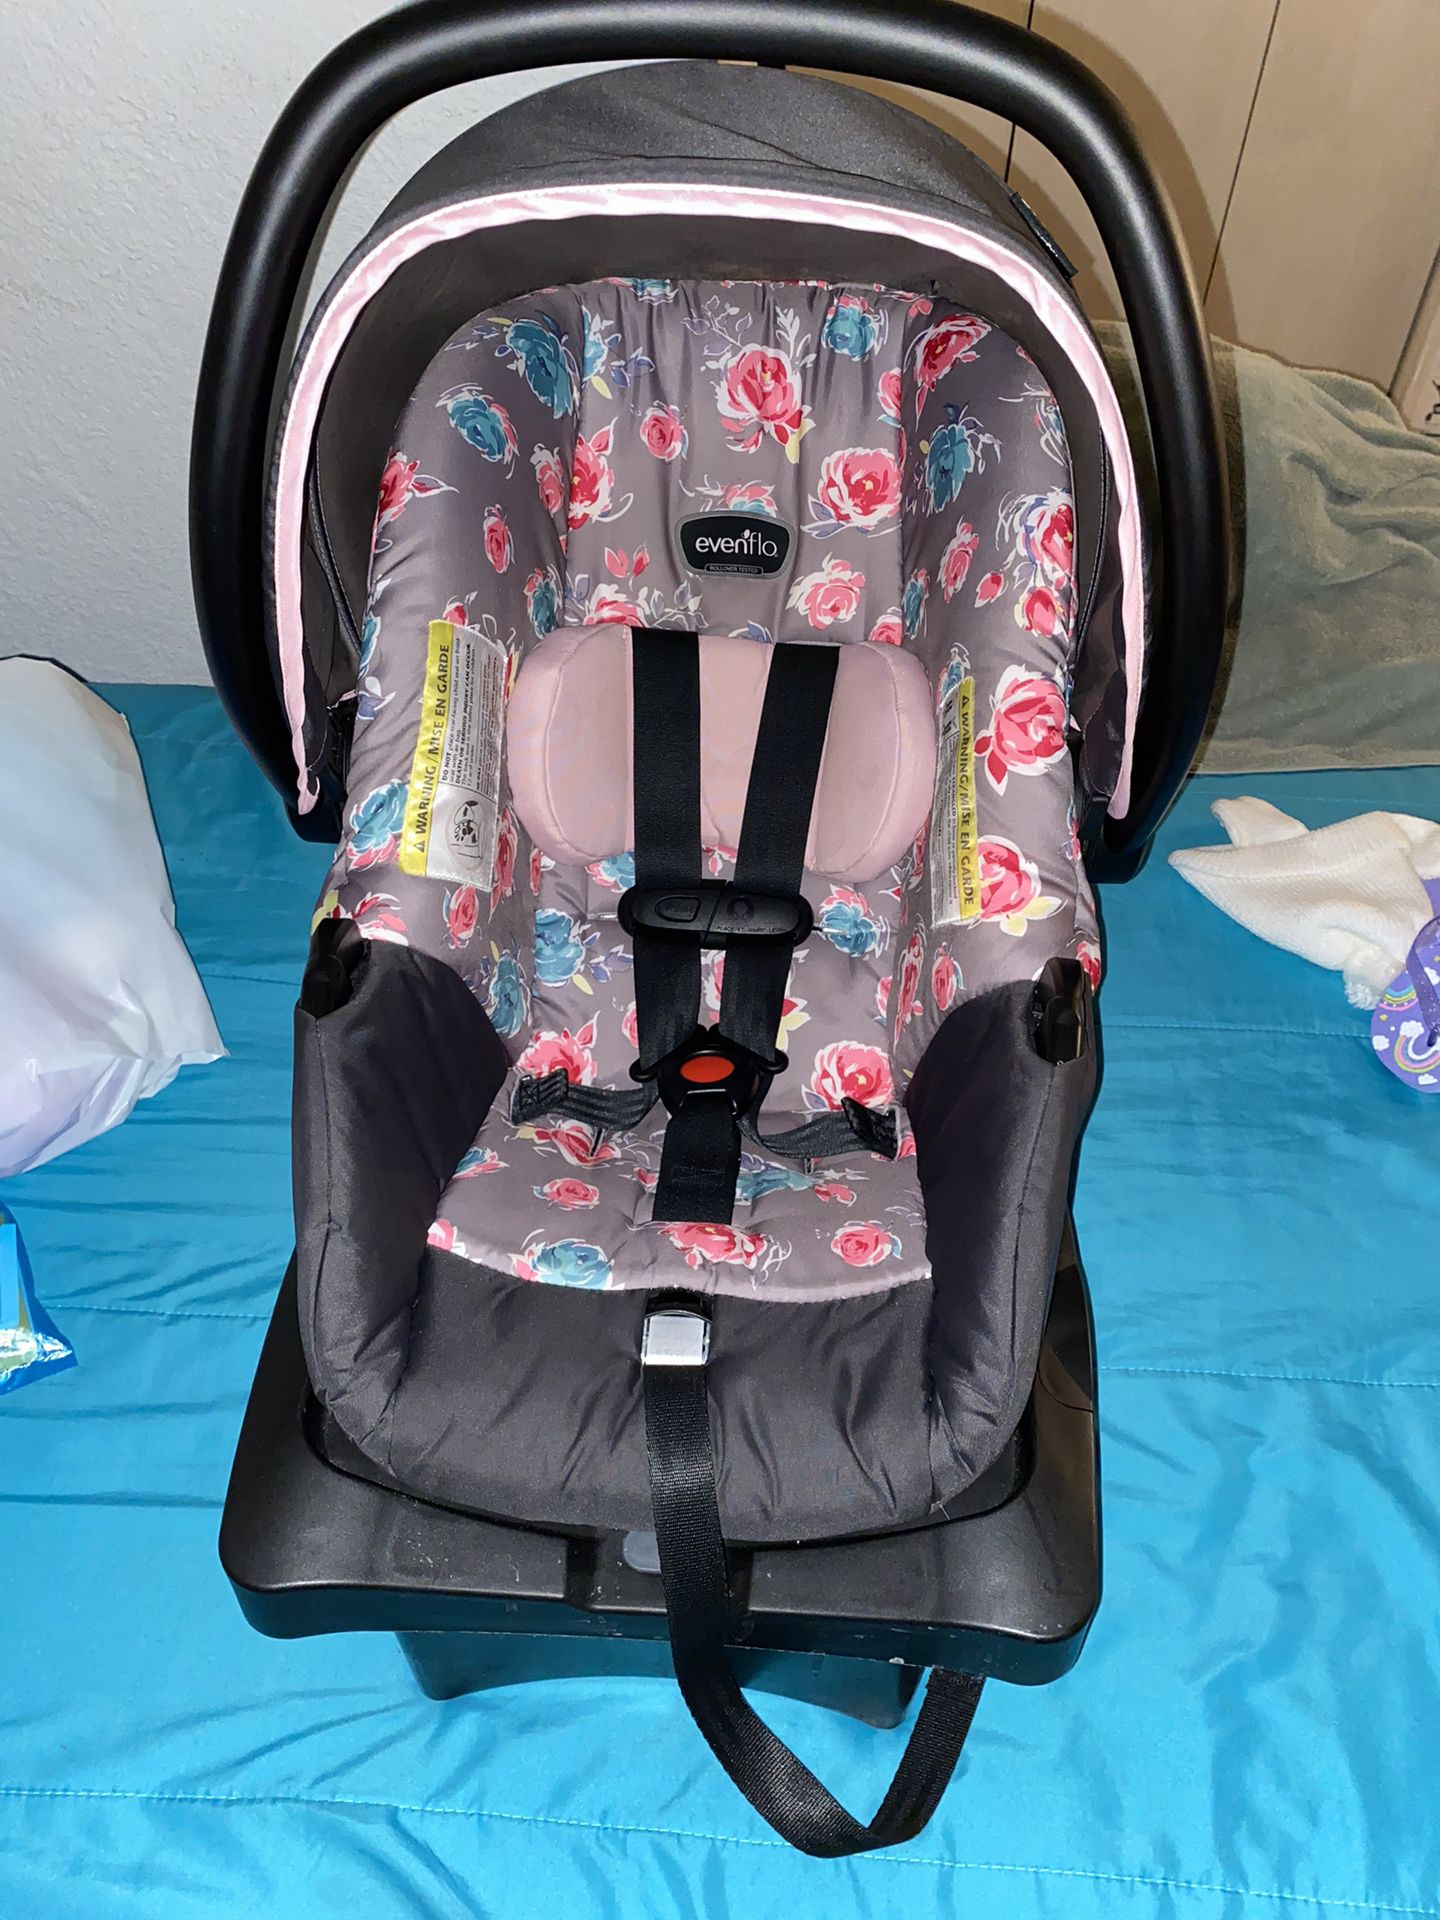 Evenflo LiteMax Sport Infant Car Seat (Rosely Pink)